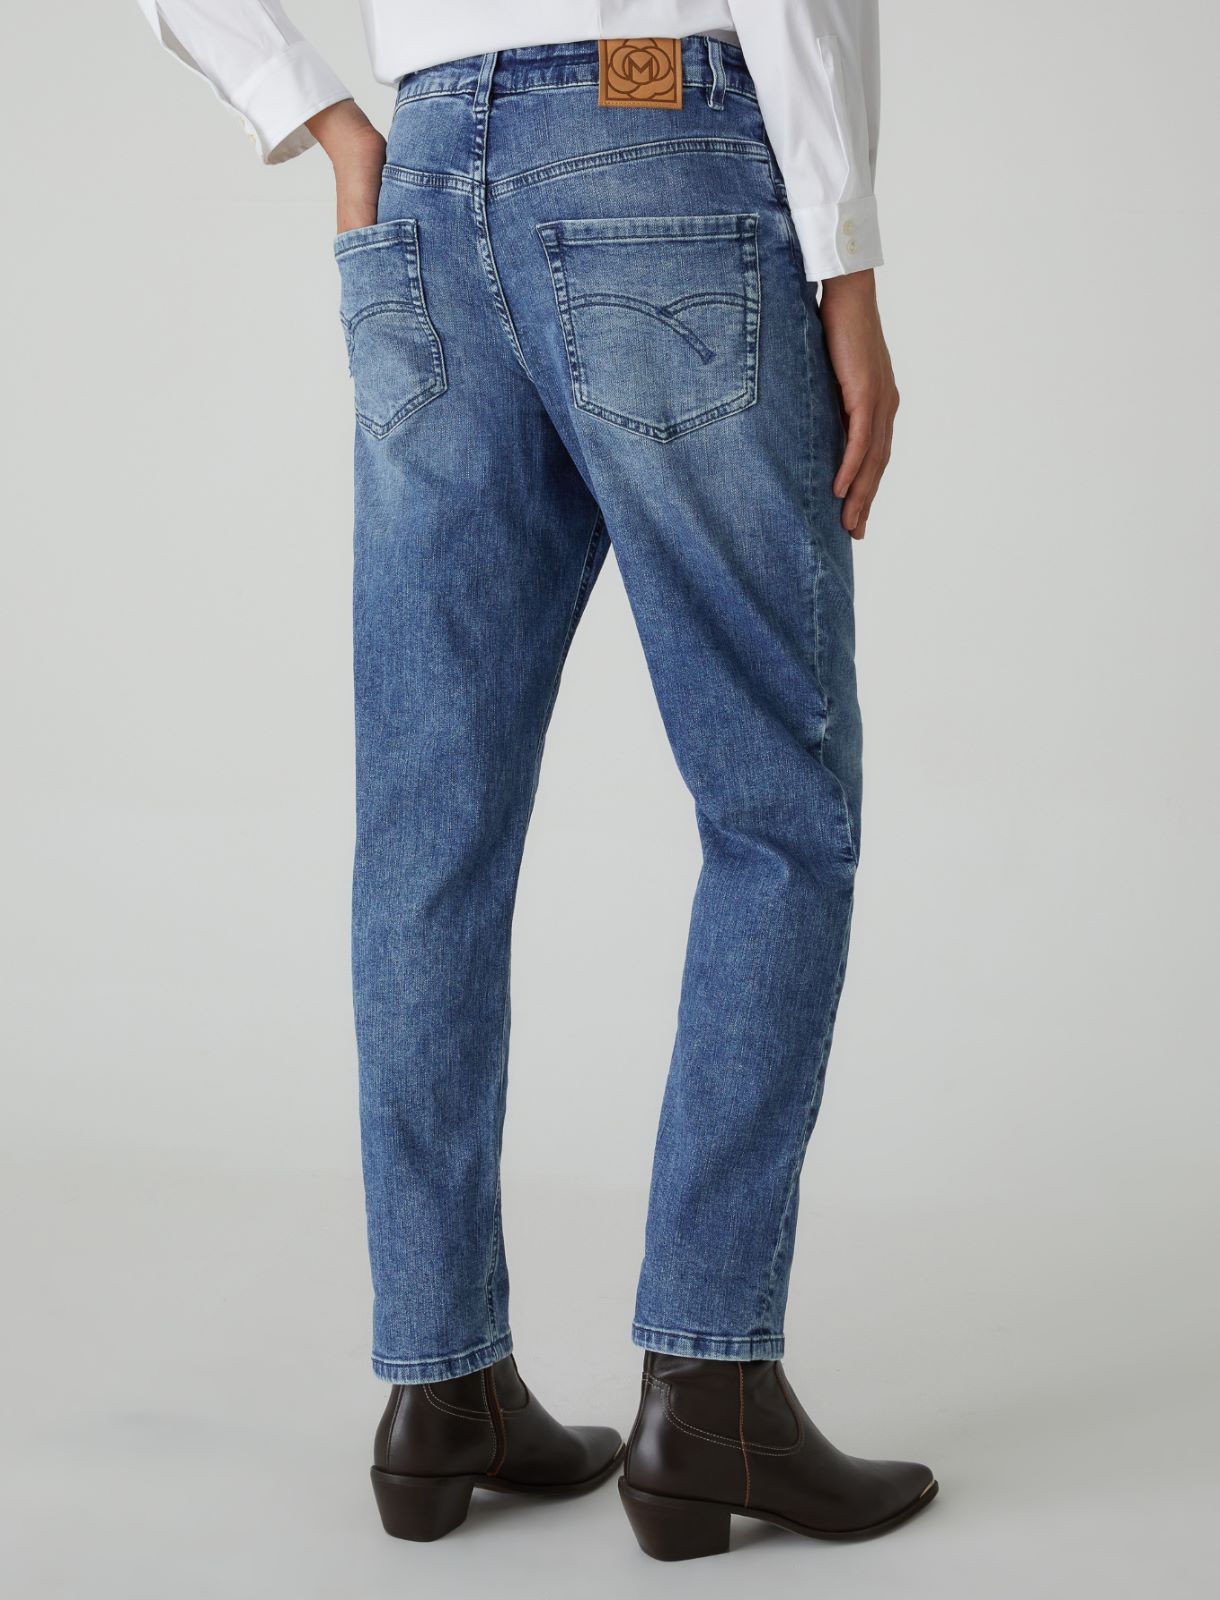 Jeans tomboy - Blue jeans - Marella - 2